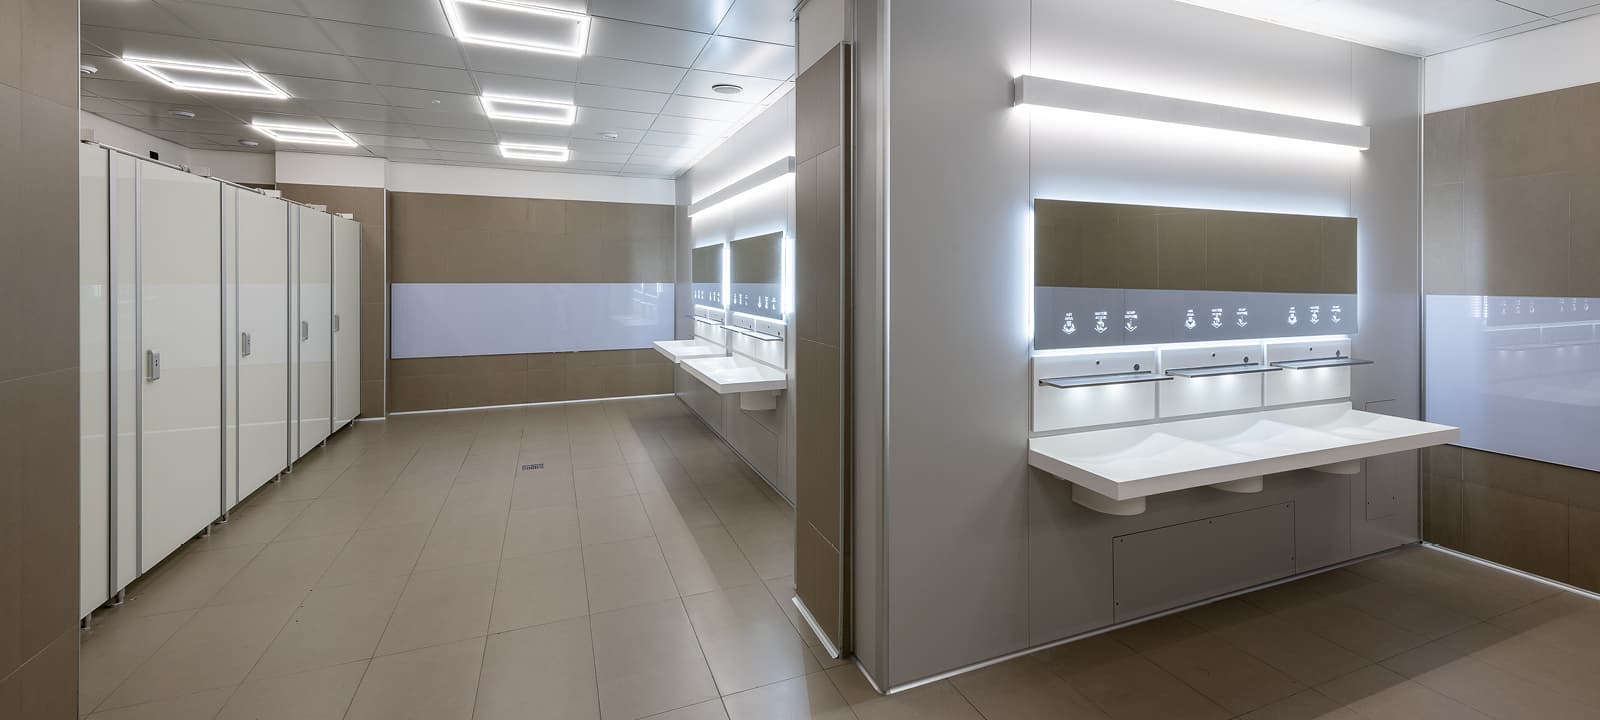 4 good reasons to choose prefabricated modular bathrooms